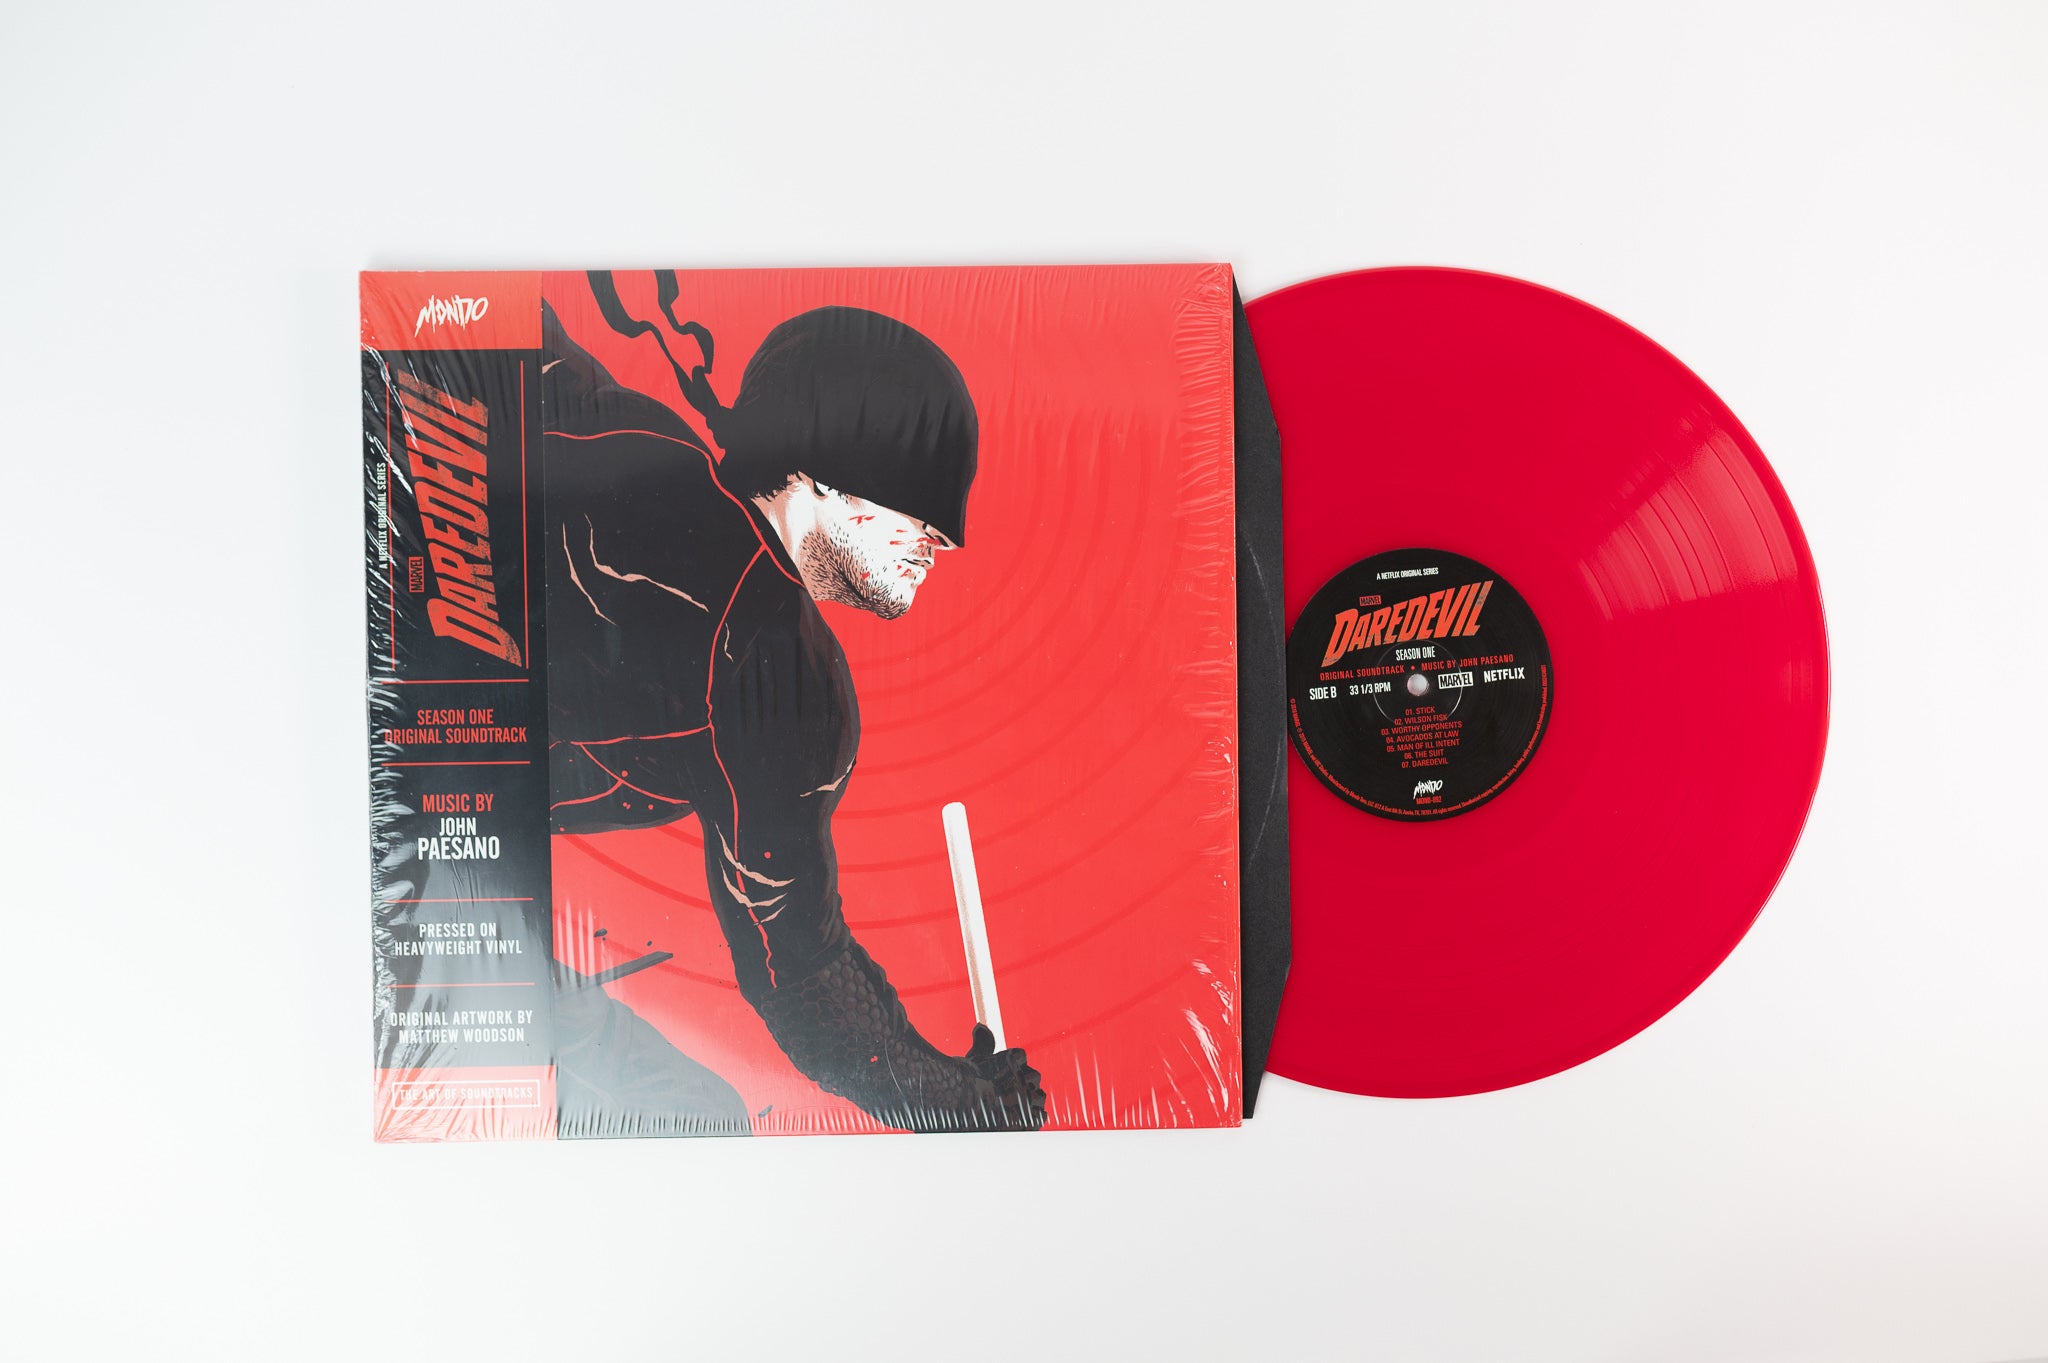 John Paesano - Daredevil - Season One (Original Soundtrack) on Mondo Limited Red Vinyl